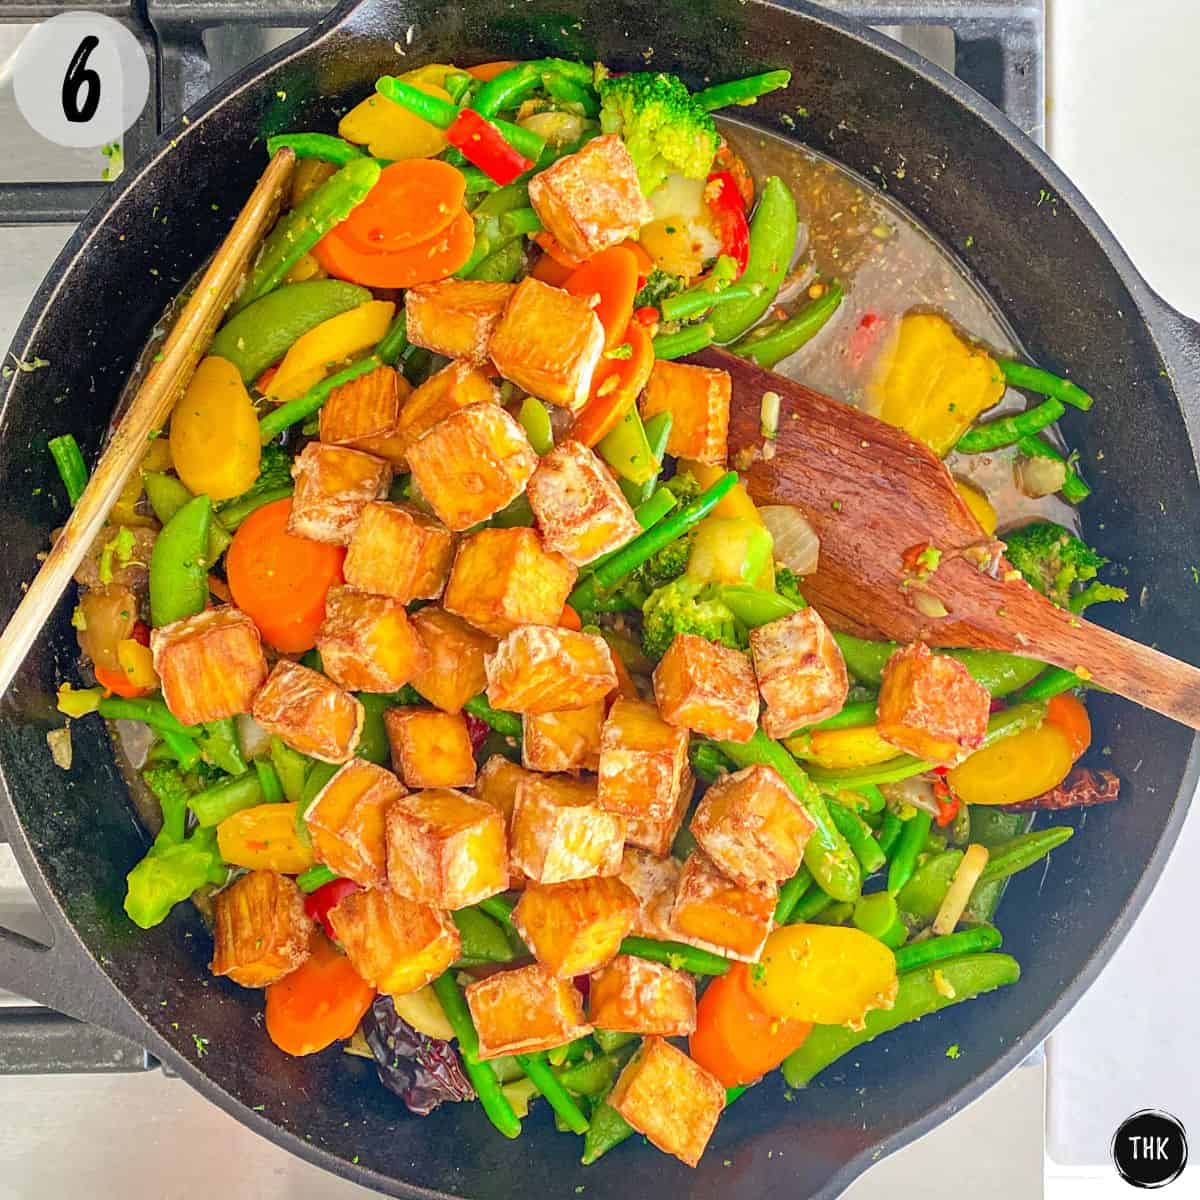 Tofu and veggies in large cast iron pan.